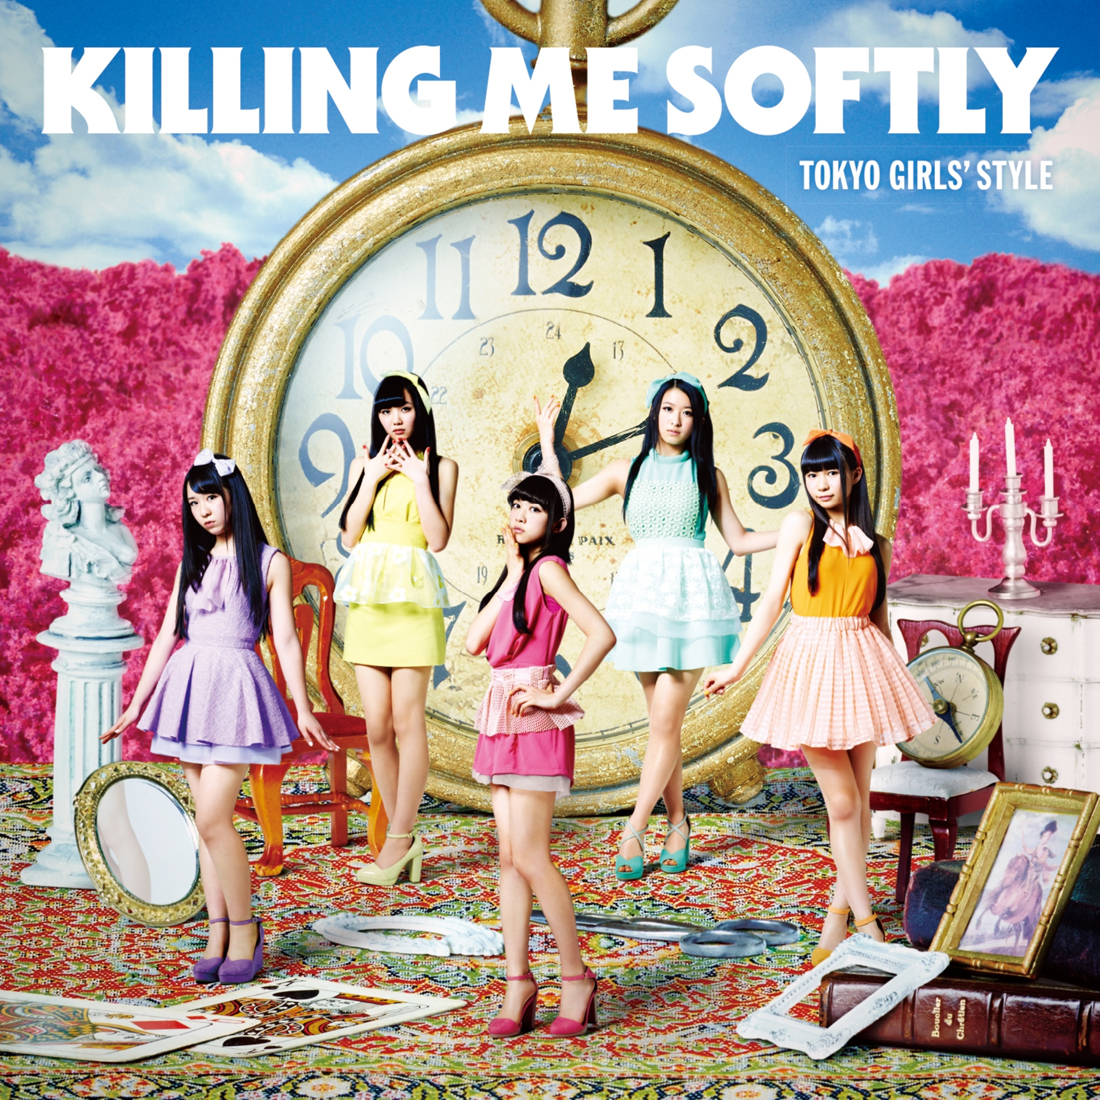 20220517.2256.10 Tokyo Girls' Style - Killing Me Softly (Blu-Ray) (JPOP.ru) cover.jpg